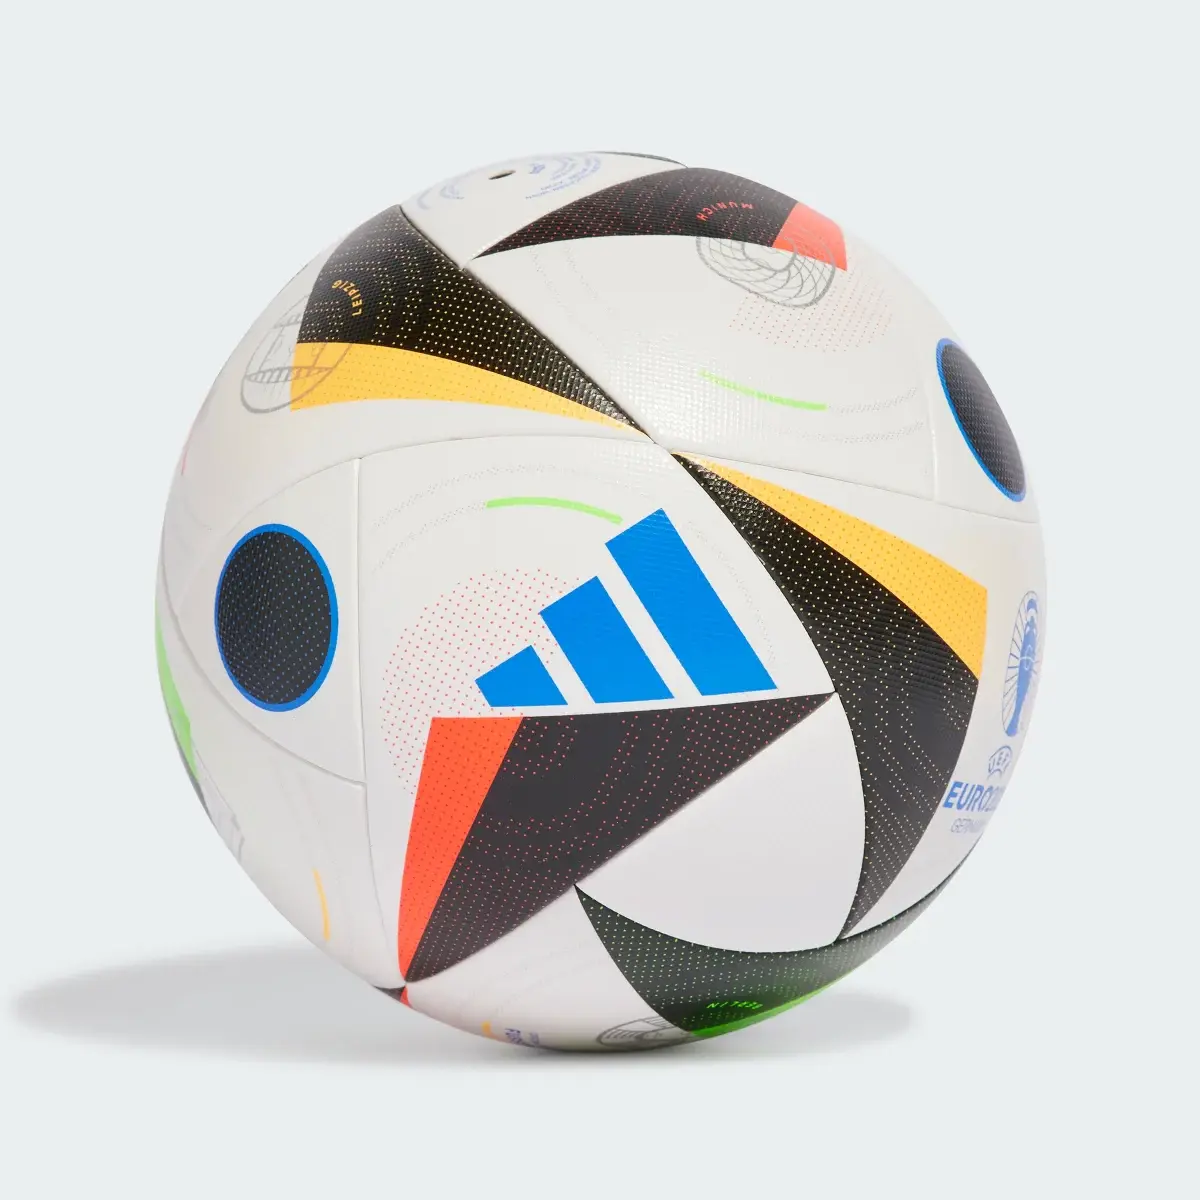 Adidas Fussballliebe Competition Ball. 2